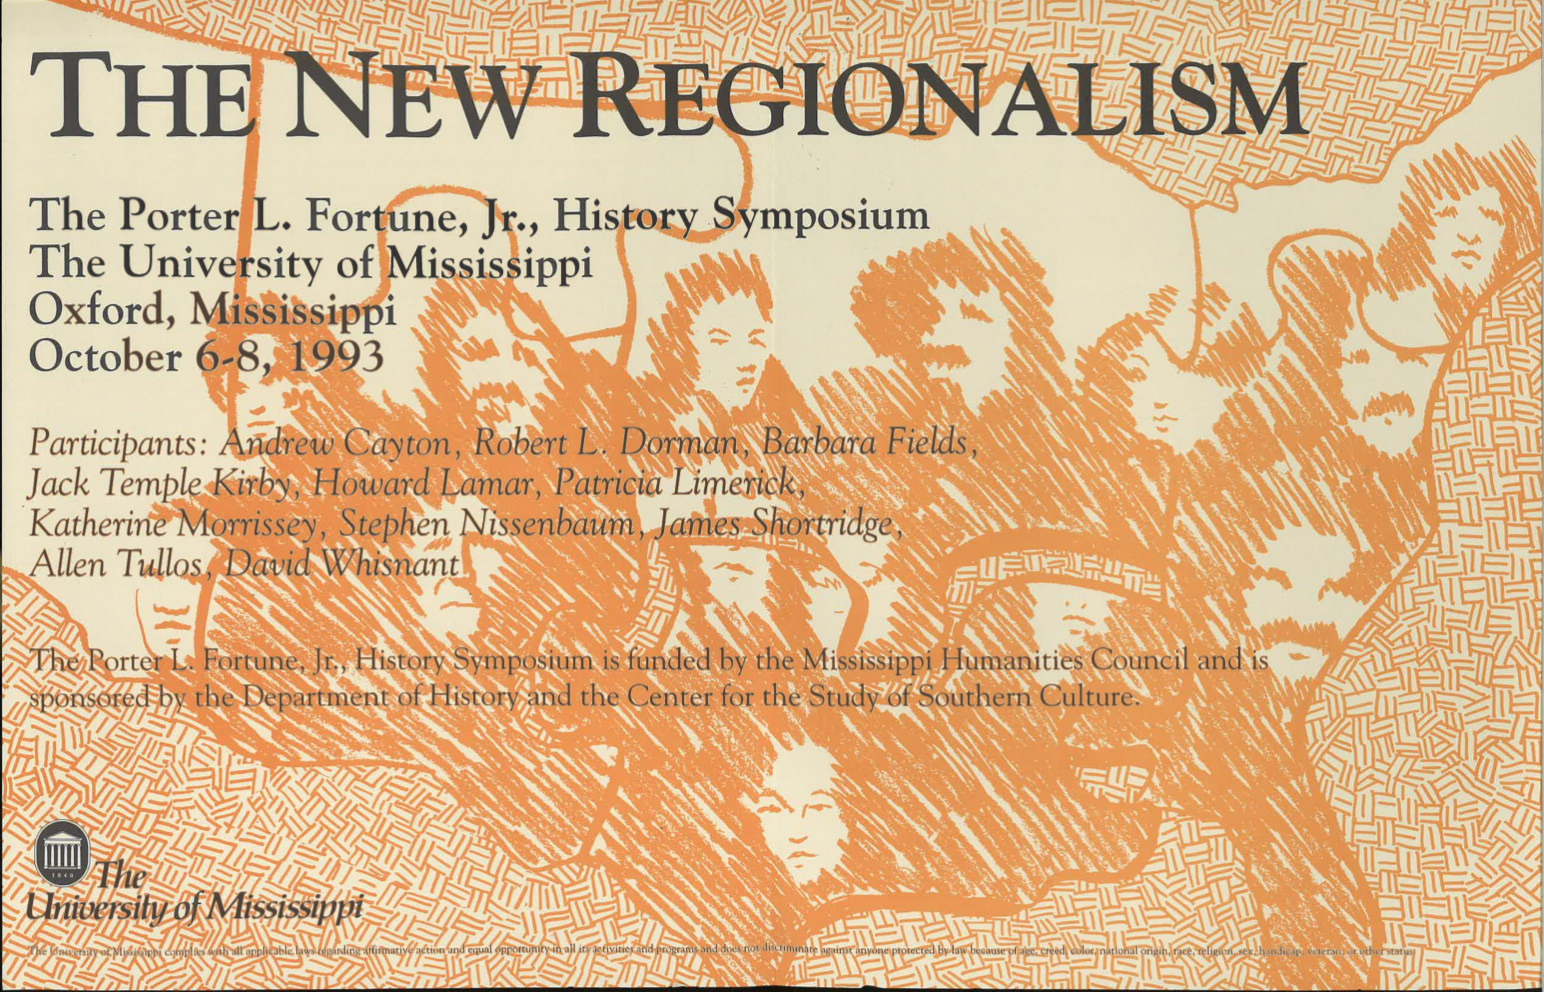 1993: The New Regionalism